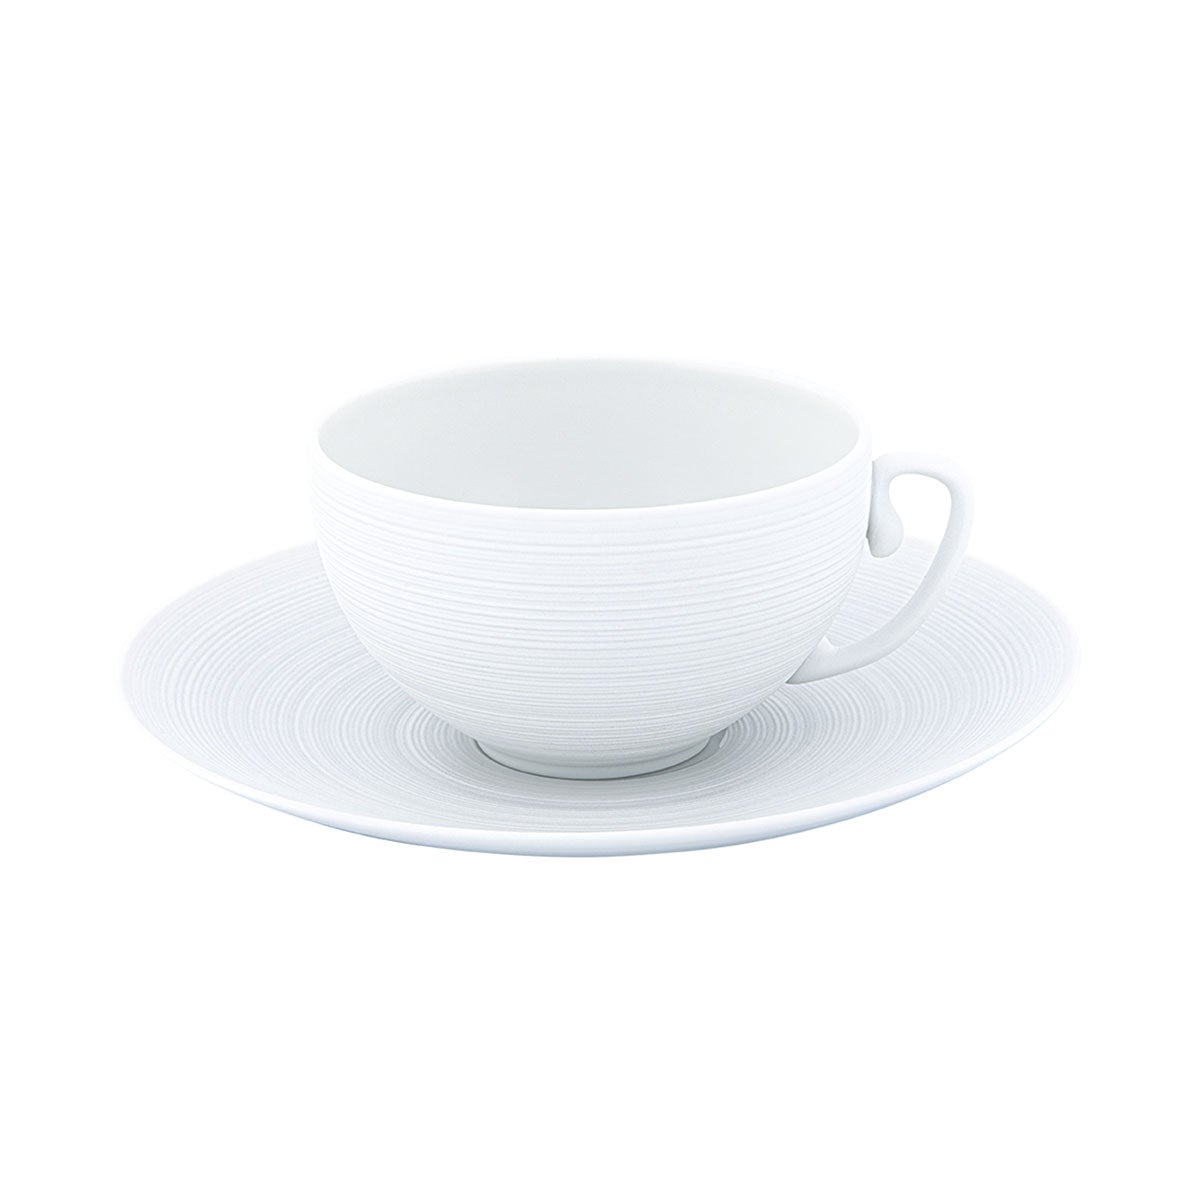 JL Coquet Hemisphere White Teacup